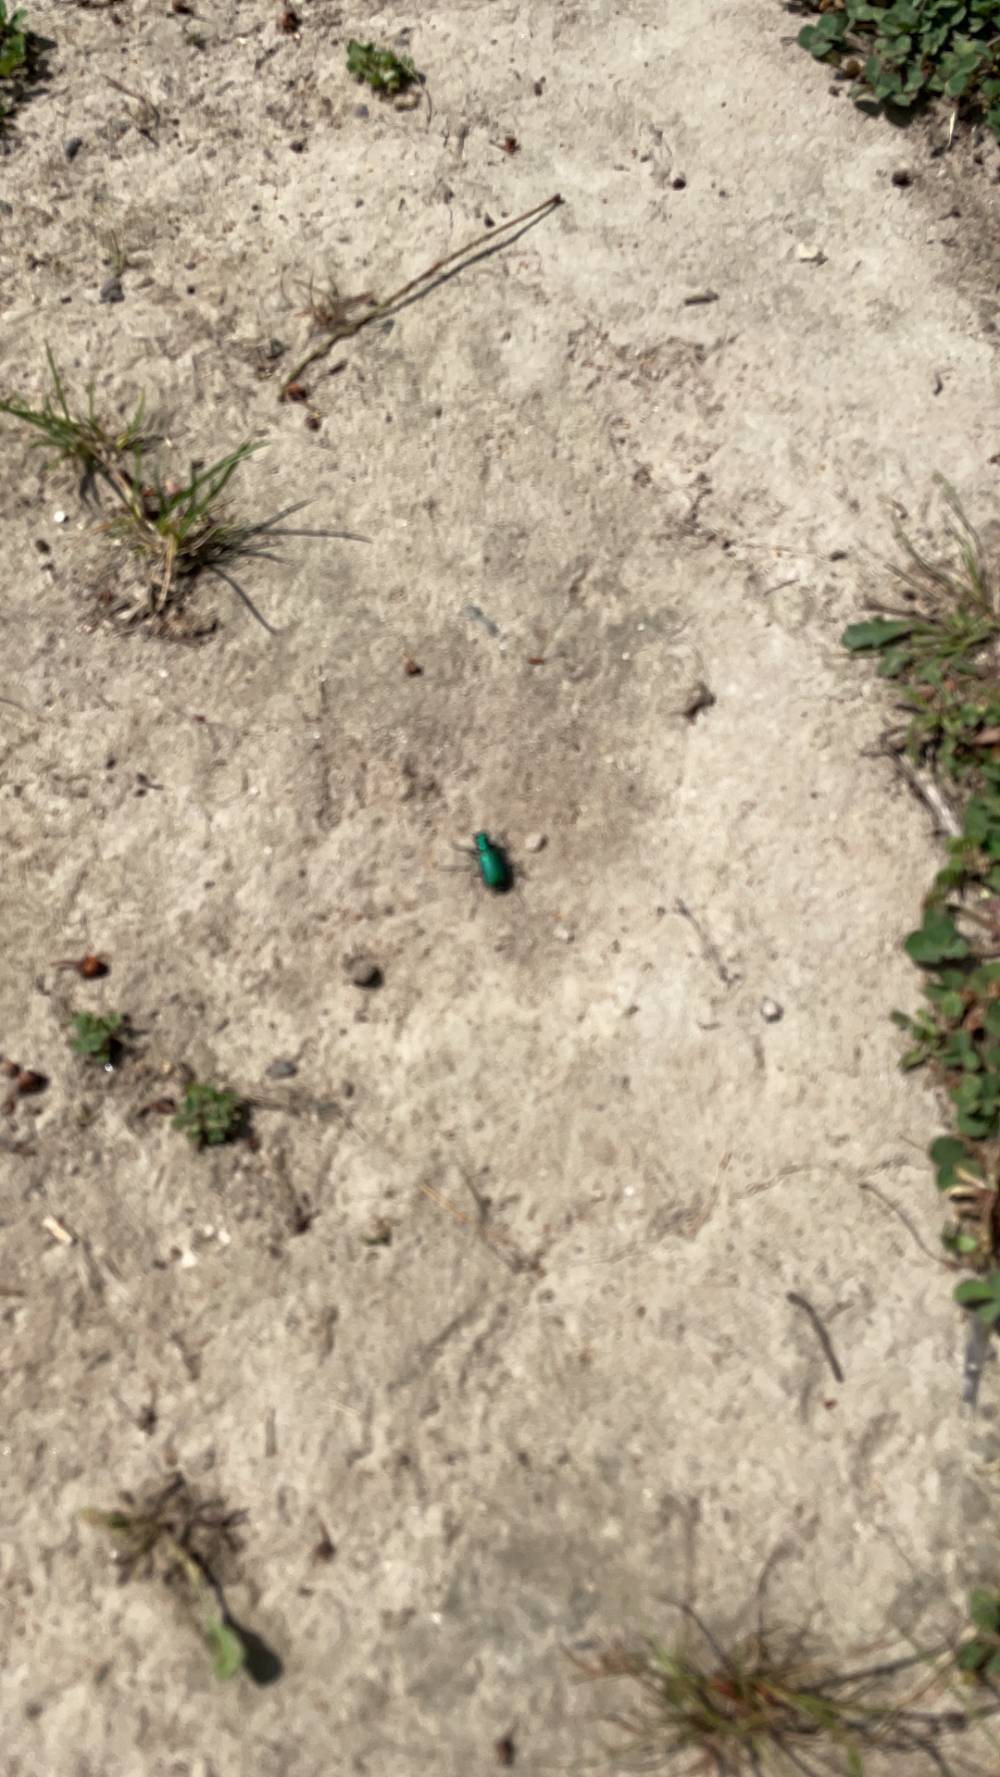 small bug on ground